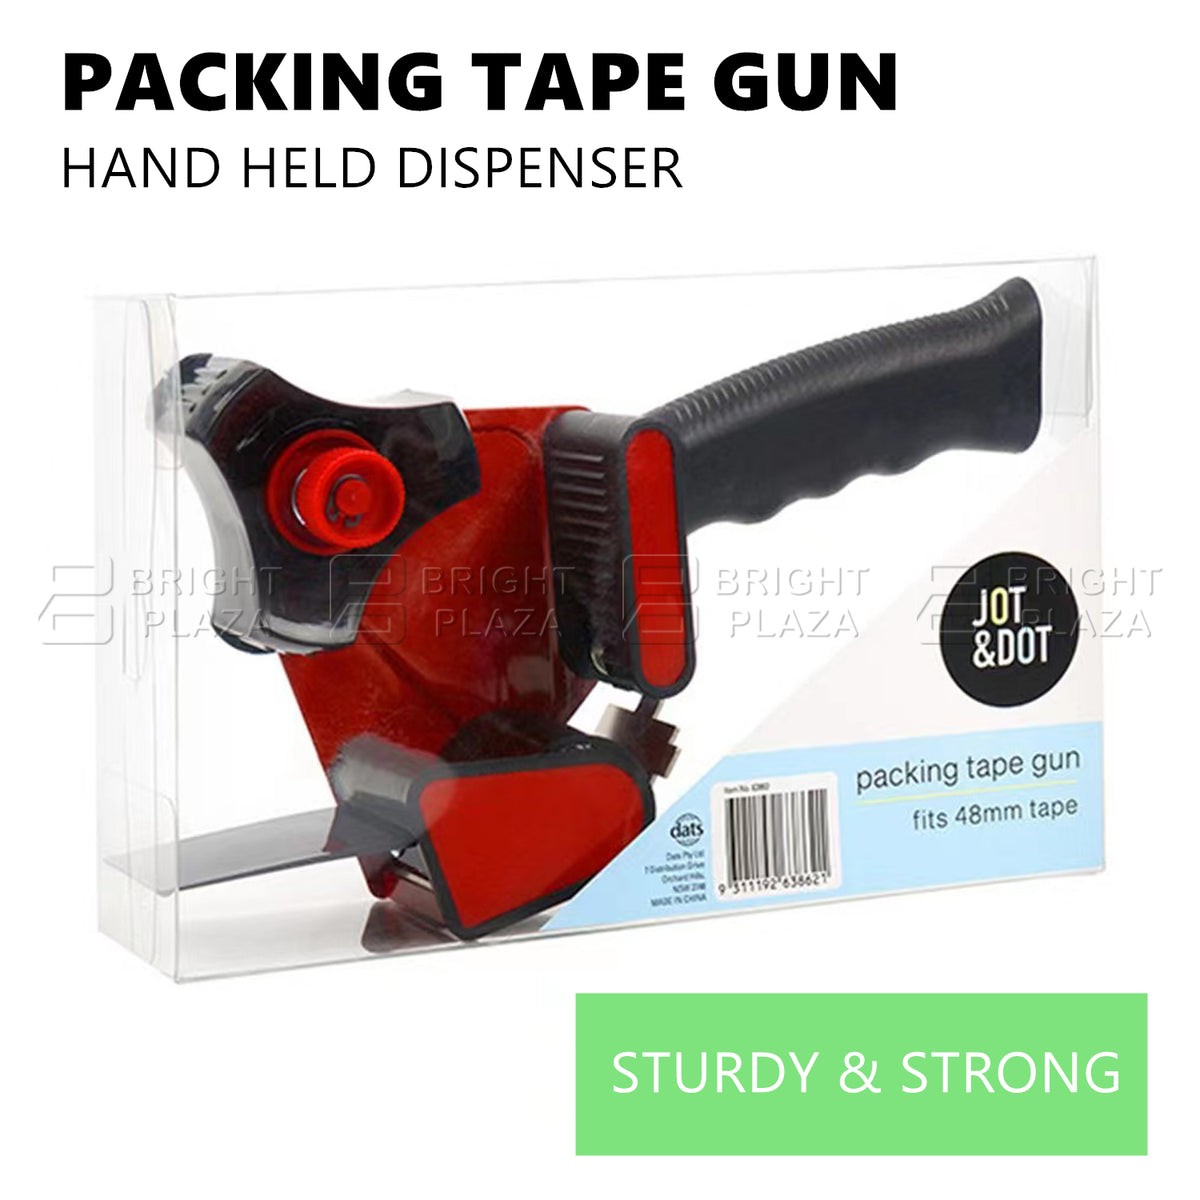 Packing Tape Dispenser Gun Fits 48mm Tape Rolls With Cutter Packaging